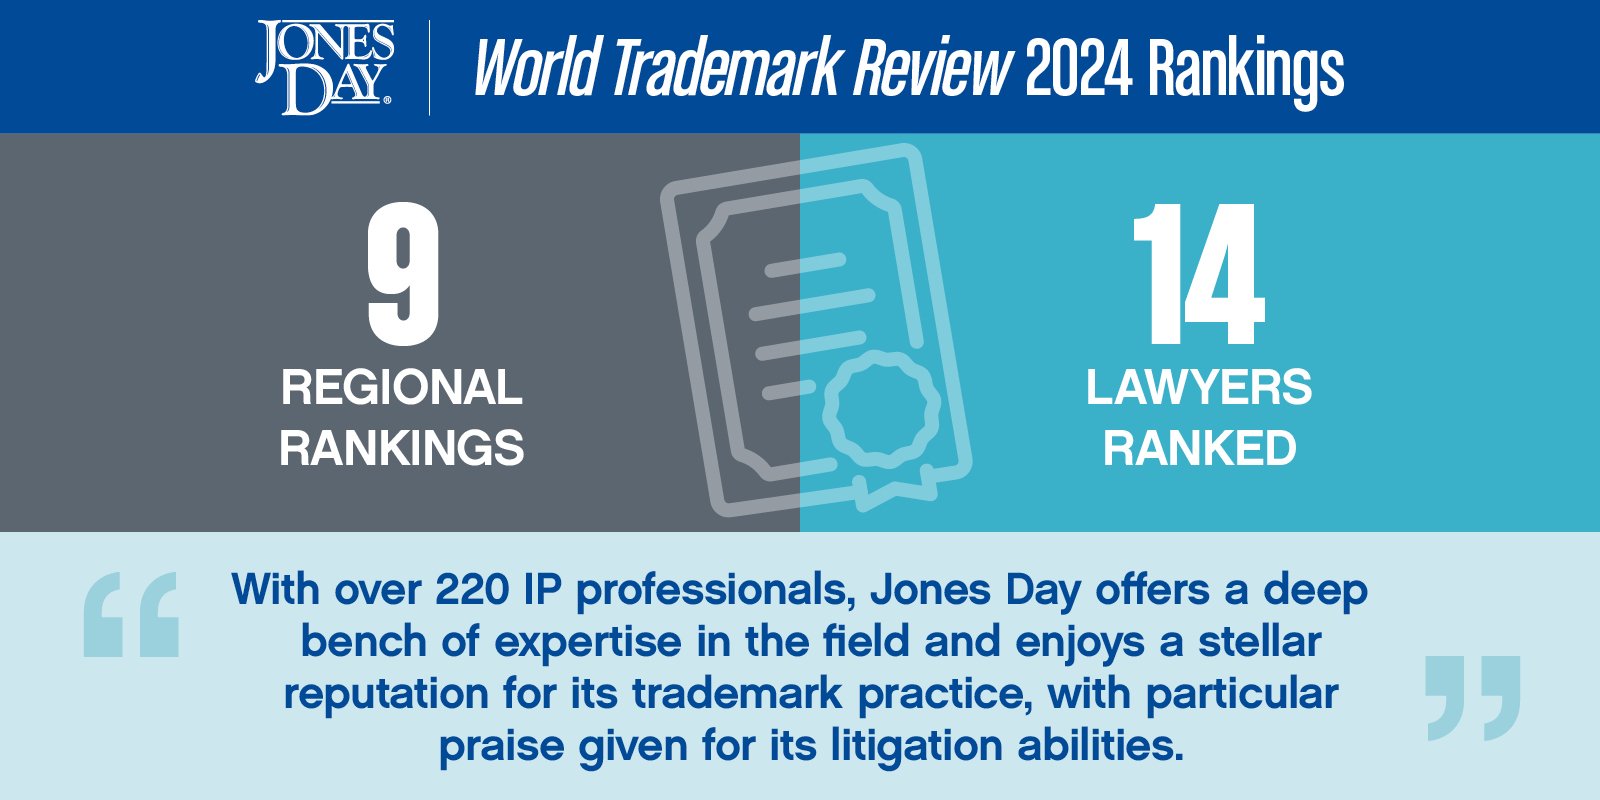 World Trademark Review 2024